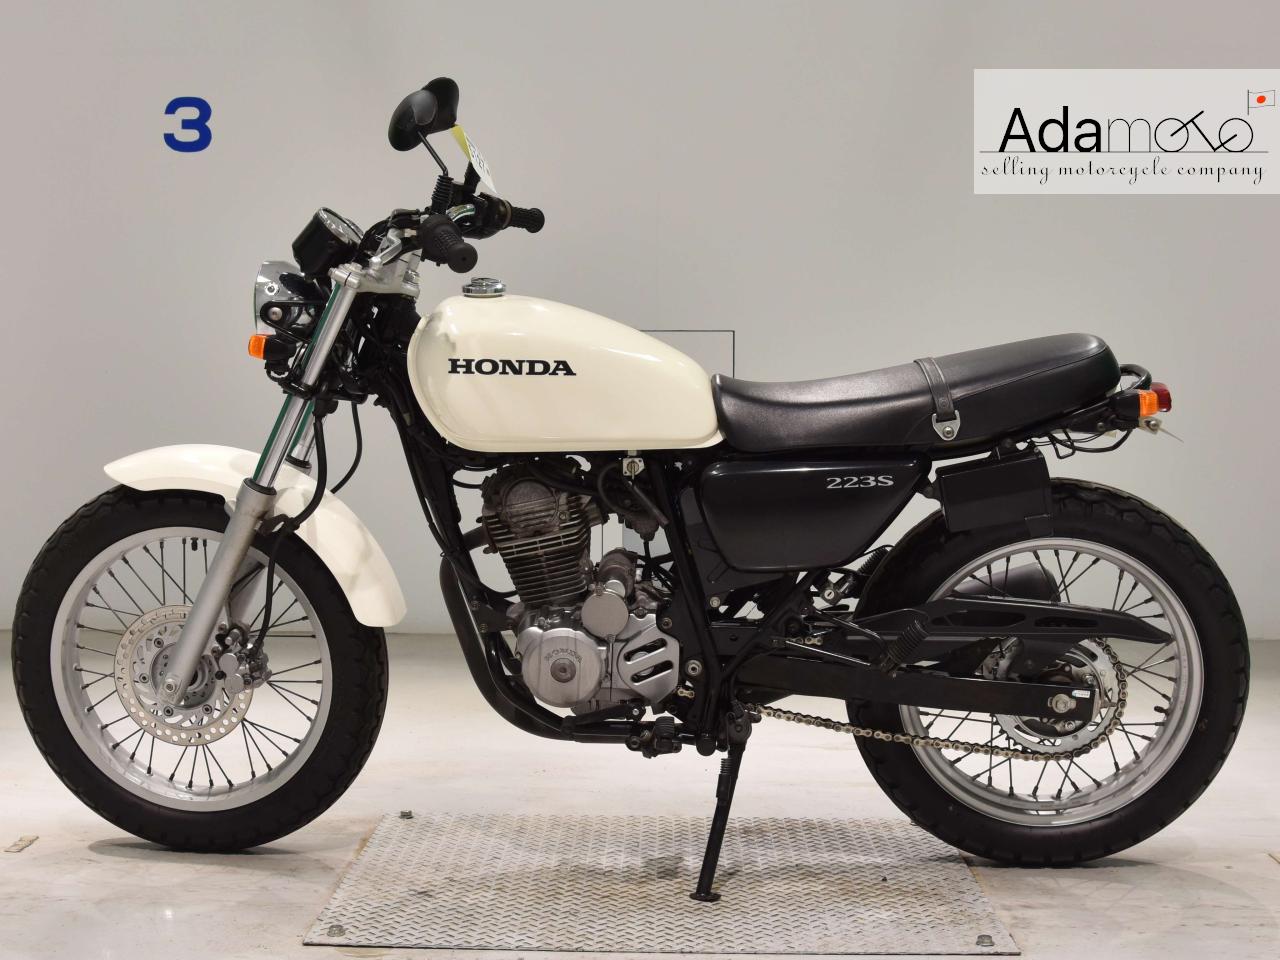 Honda CB223S - Adamoto - Motorcycles from Japan